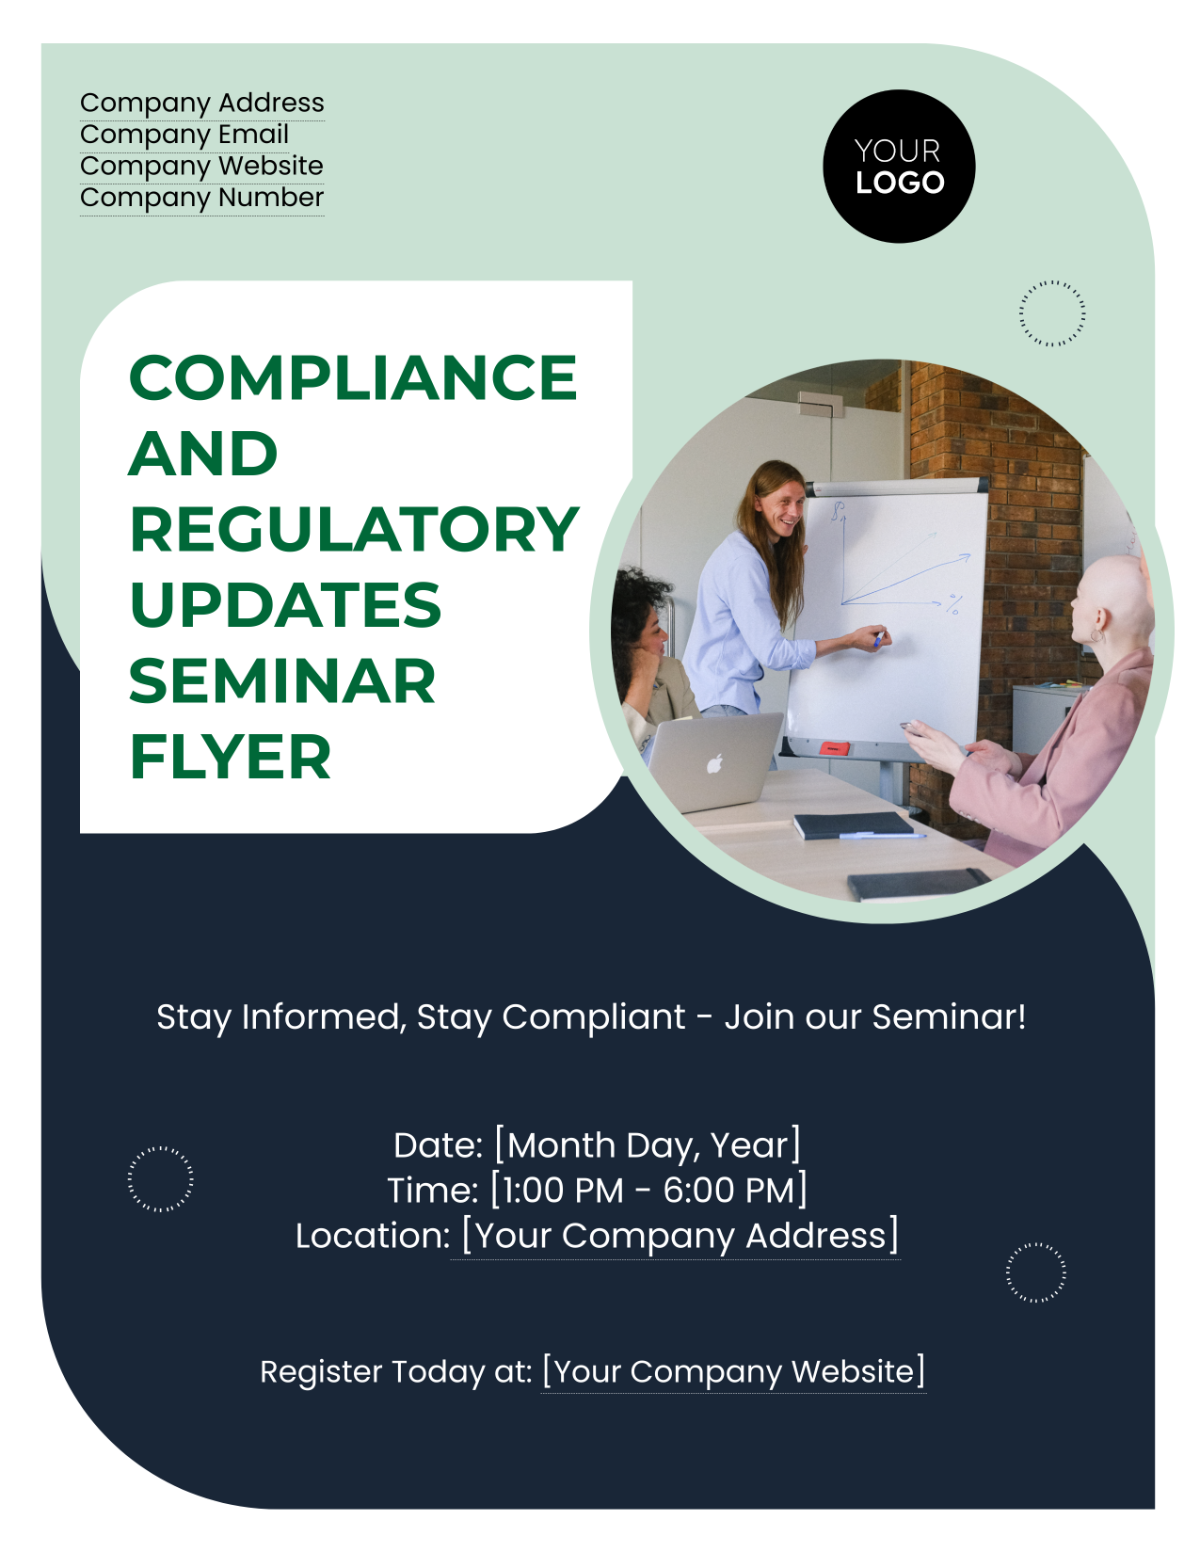 Free Compliance and Regulatory Updates Seminar Flyer Template